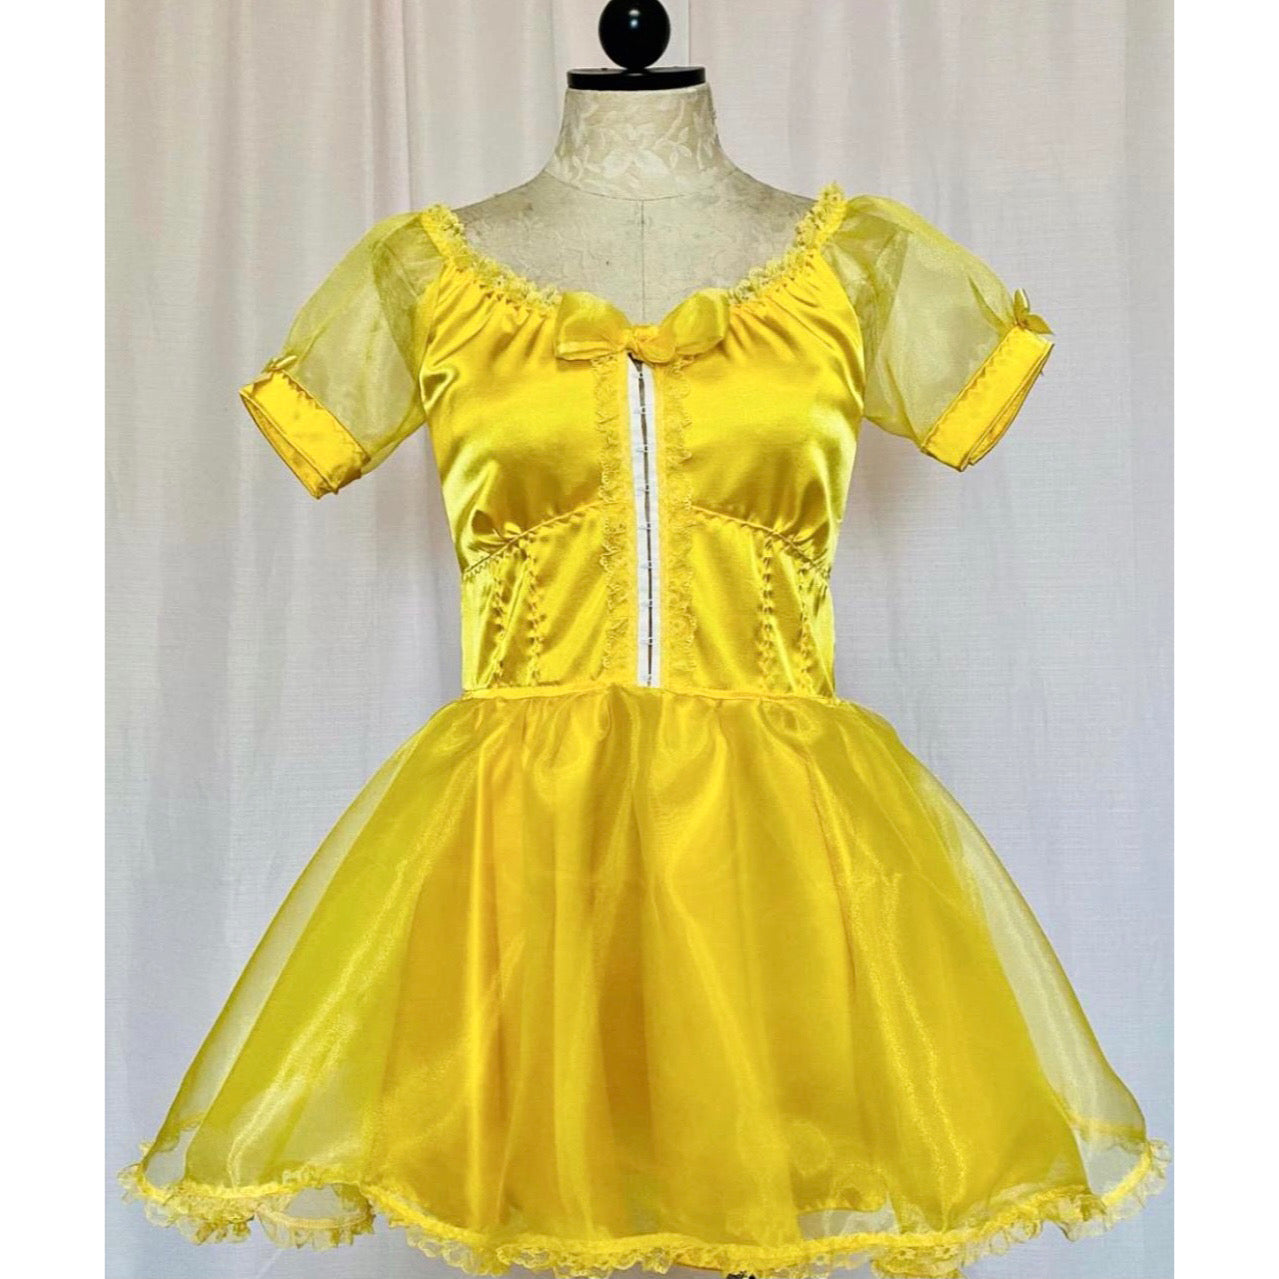 The Sebastian Dress in Yellow